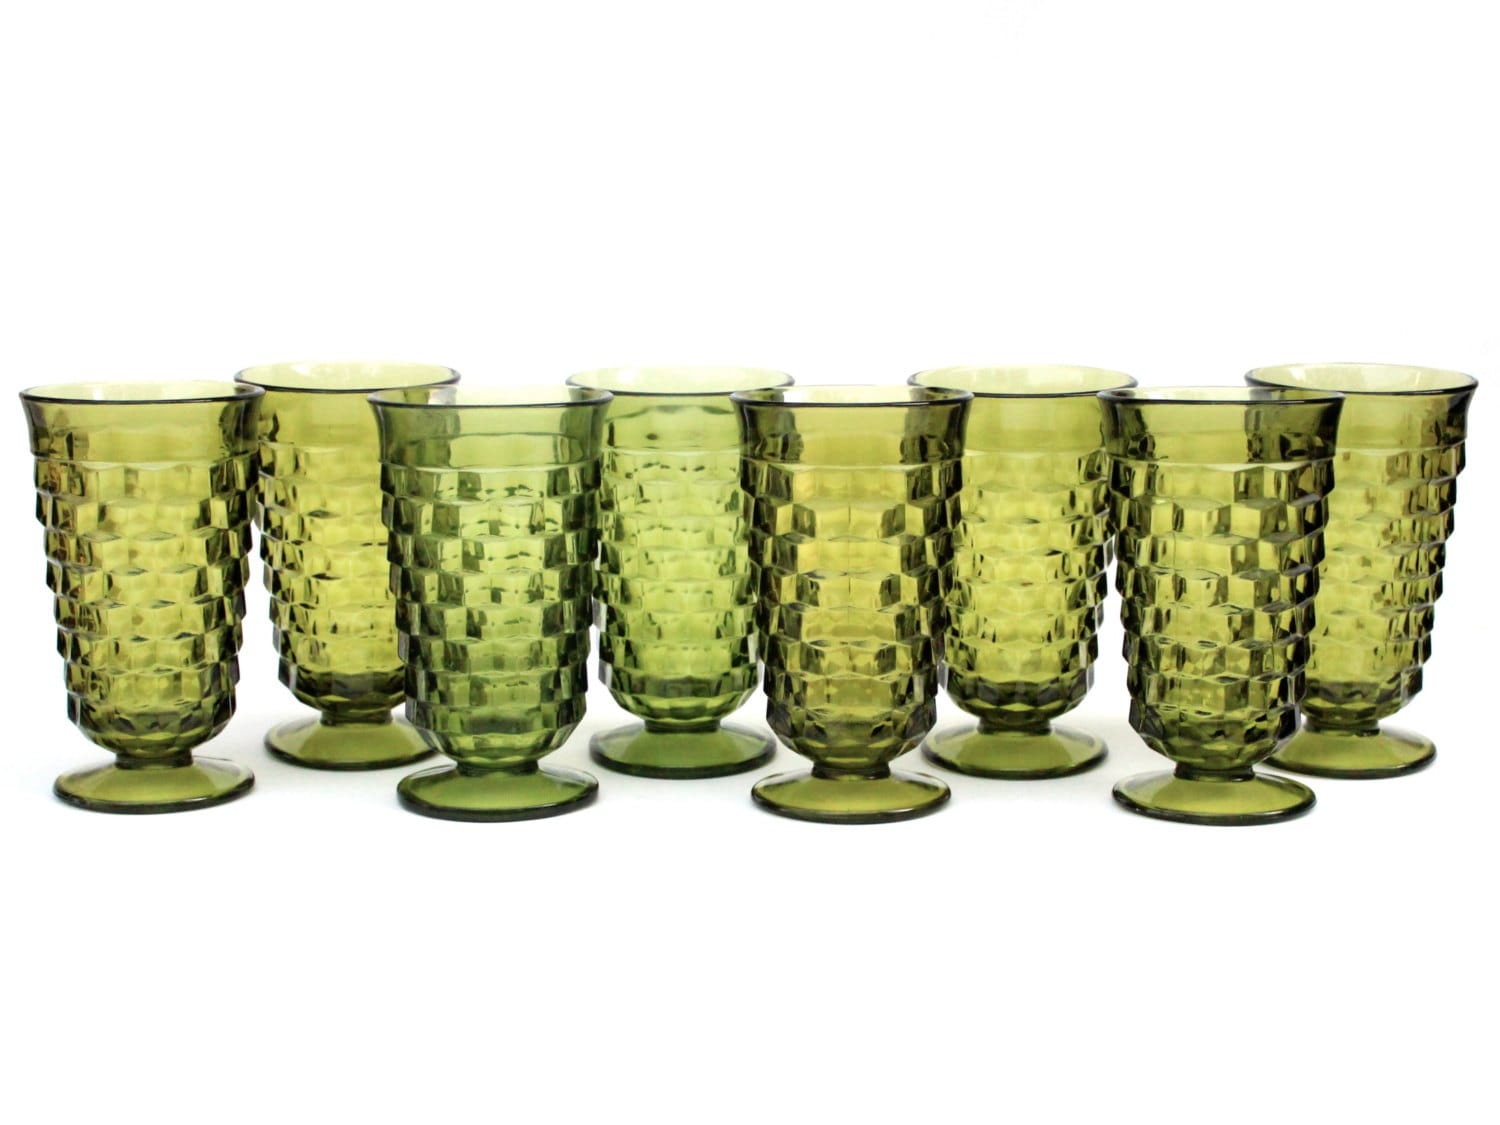 Green fostoria glassware